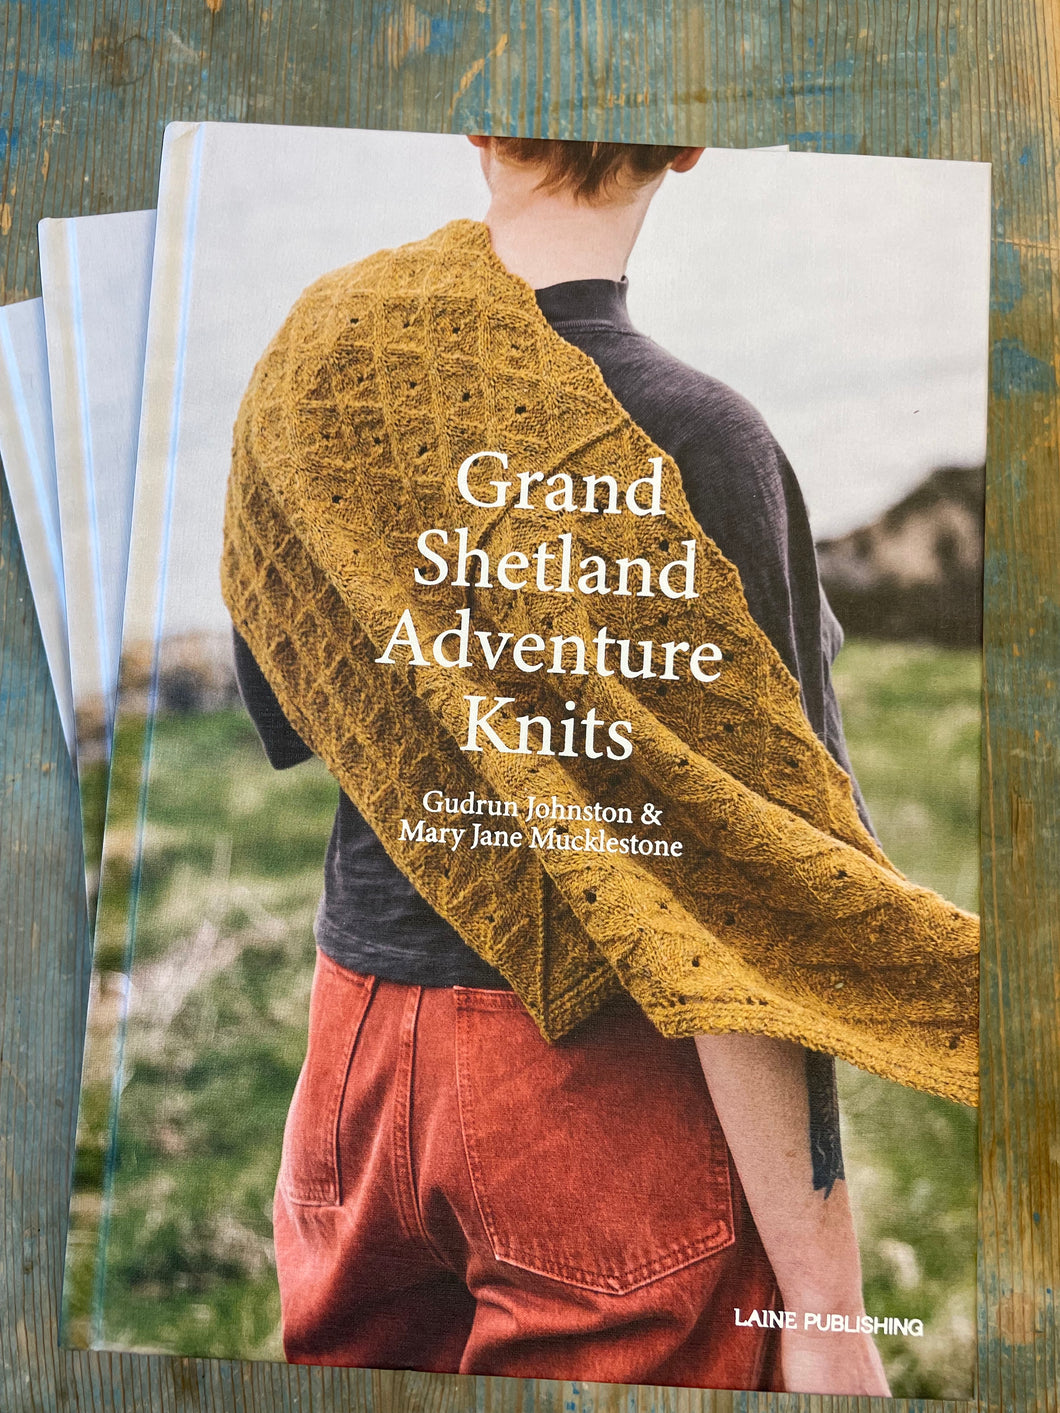 Grand Shetland Adventure Knits book by Mary Jane Mucklestone and Gudrun Johnston